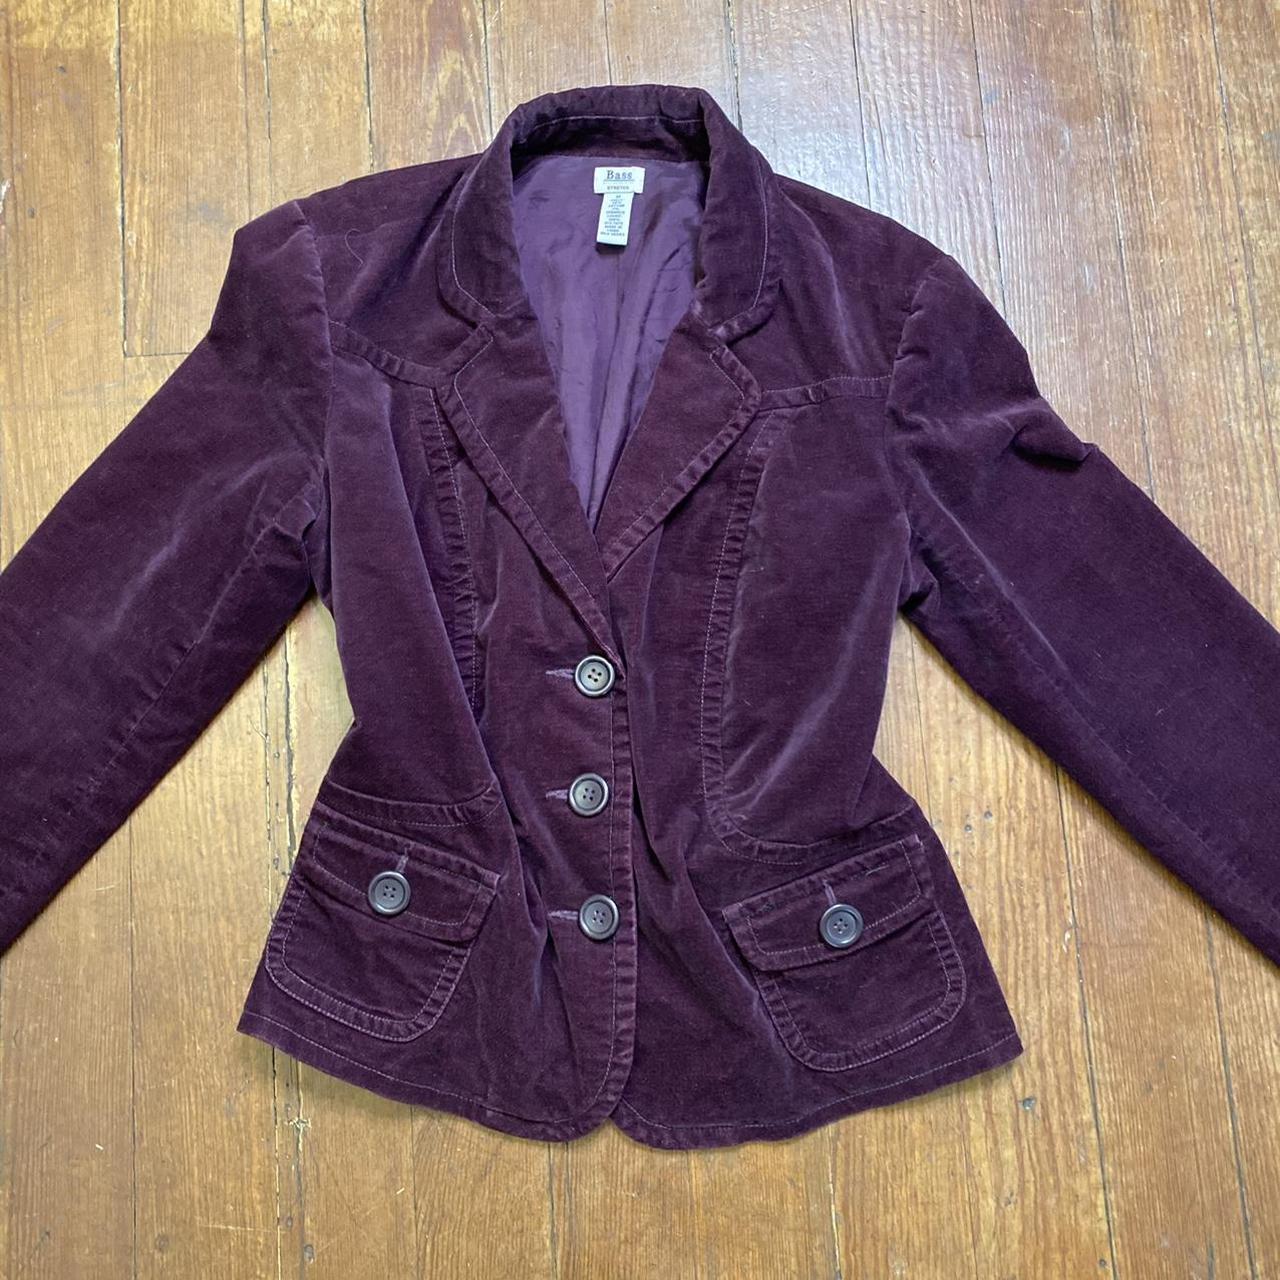 Purple velvet #whimsigoth button up blazer 💜 I’m... - Depop